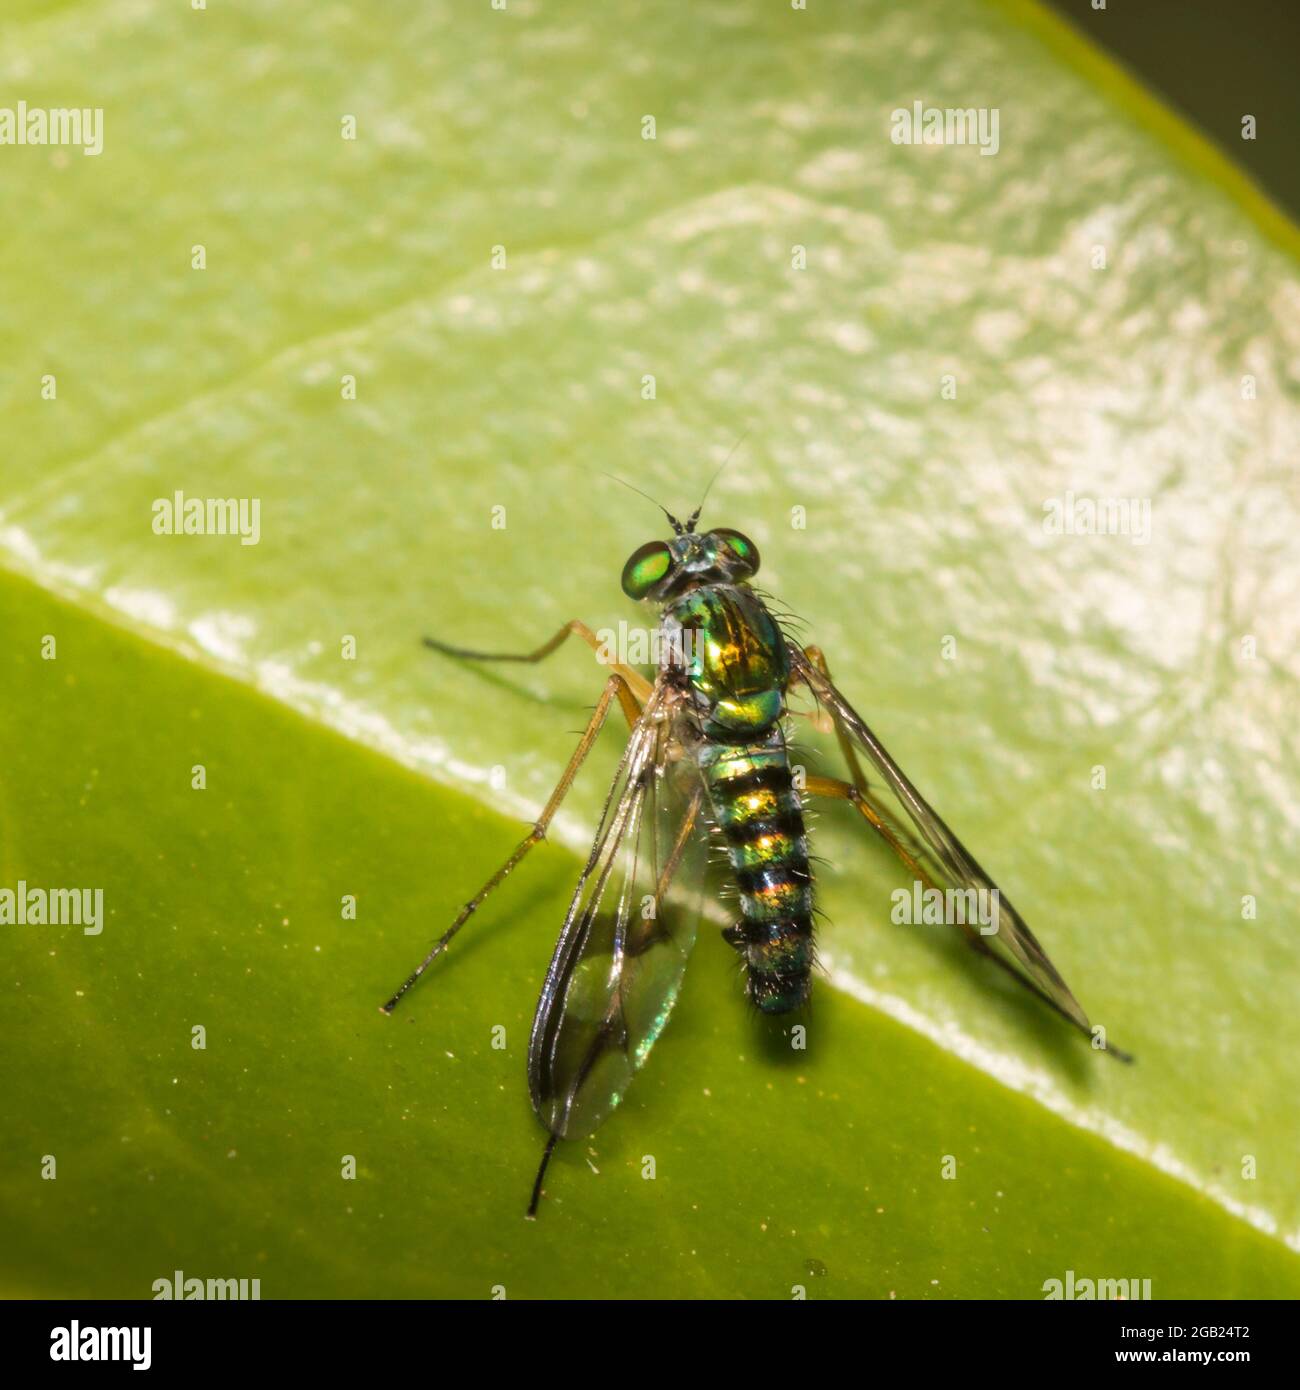 green long legged fly on a leaf Stock Photo